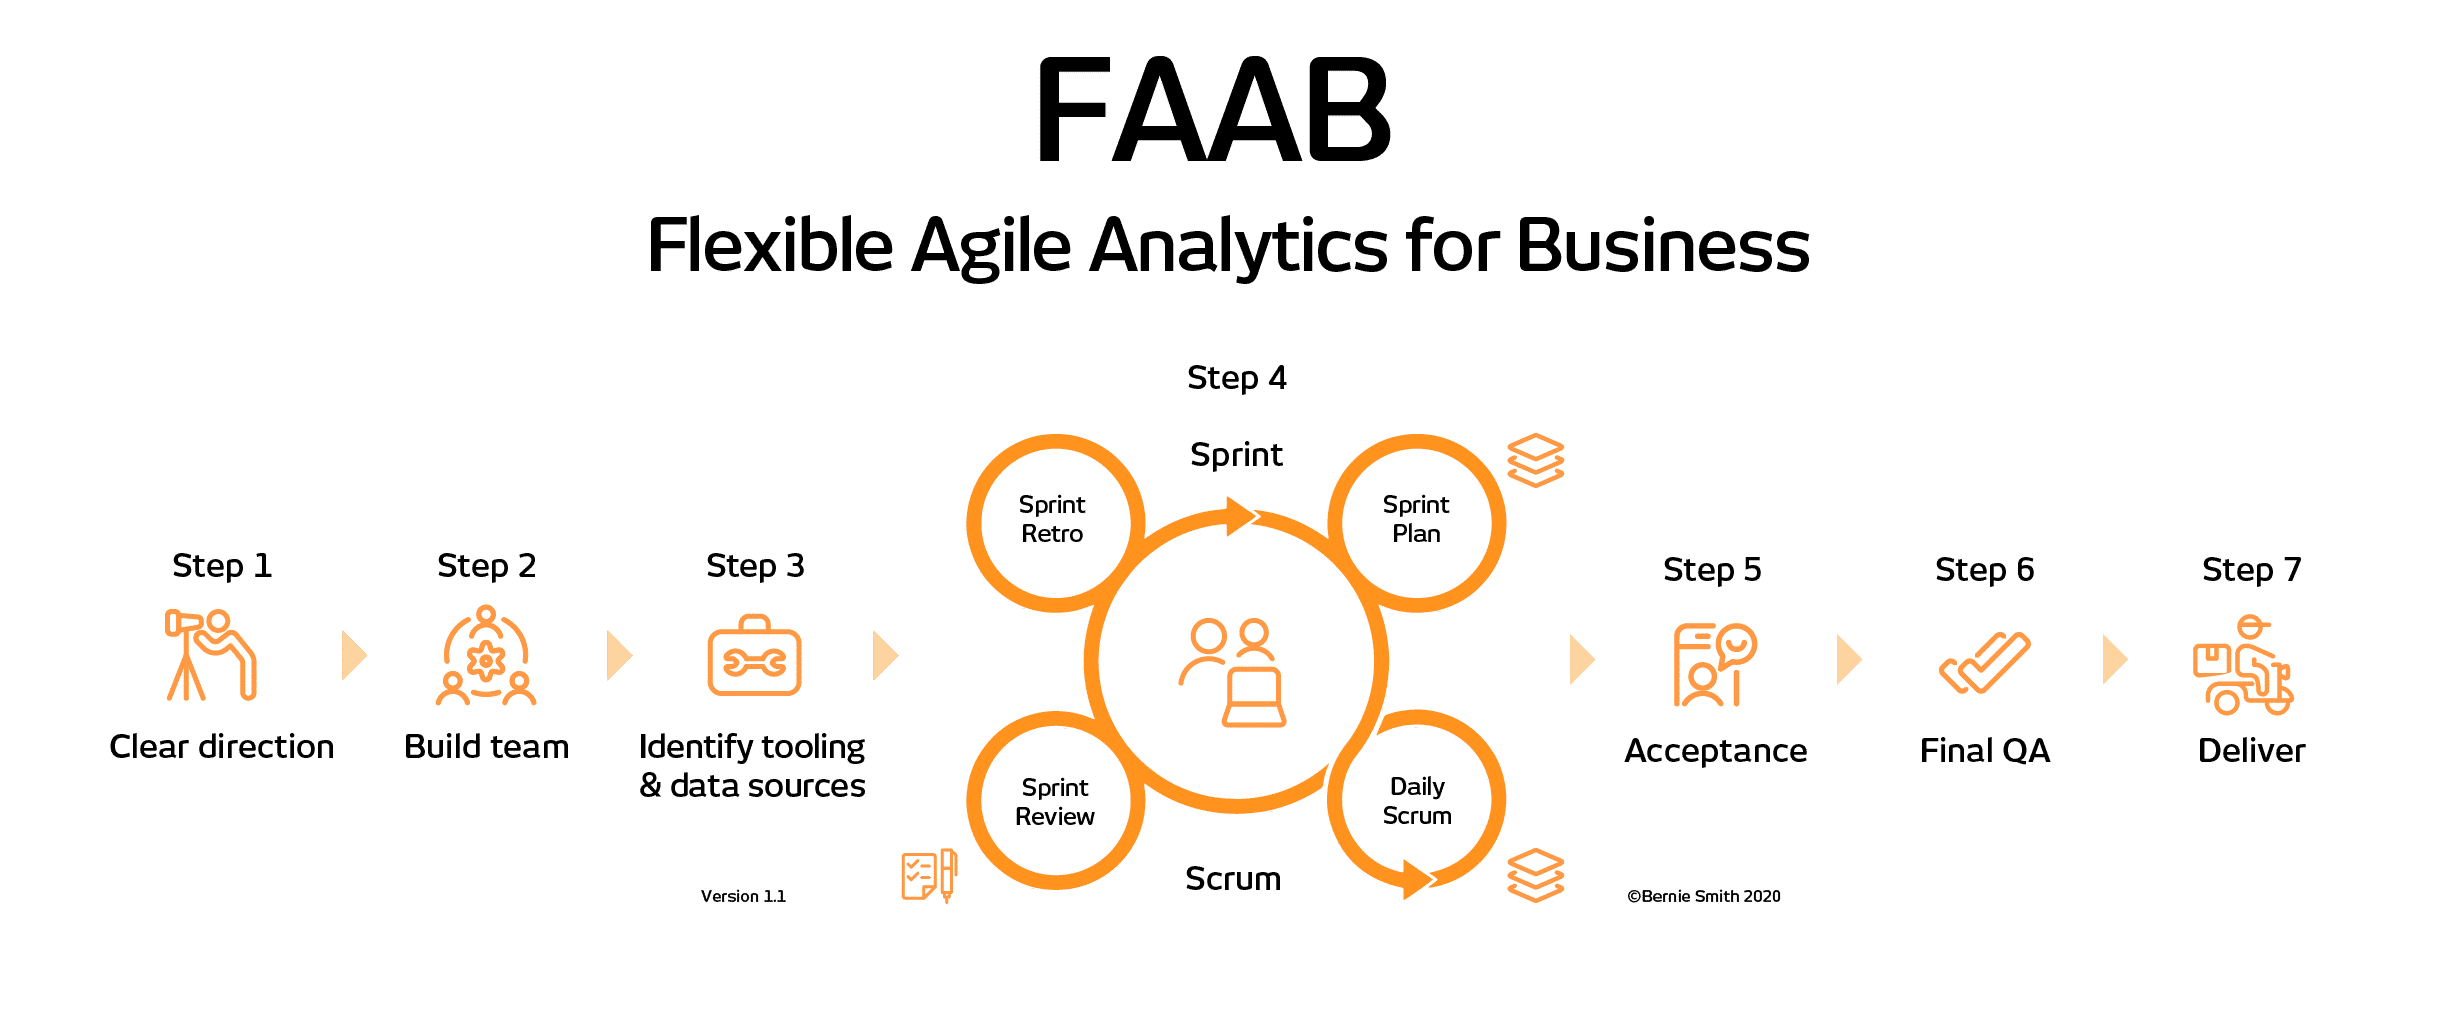 Full FAAB Agile Analytics Method Process with title